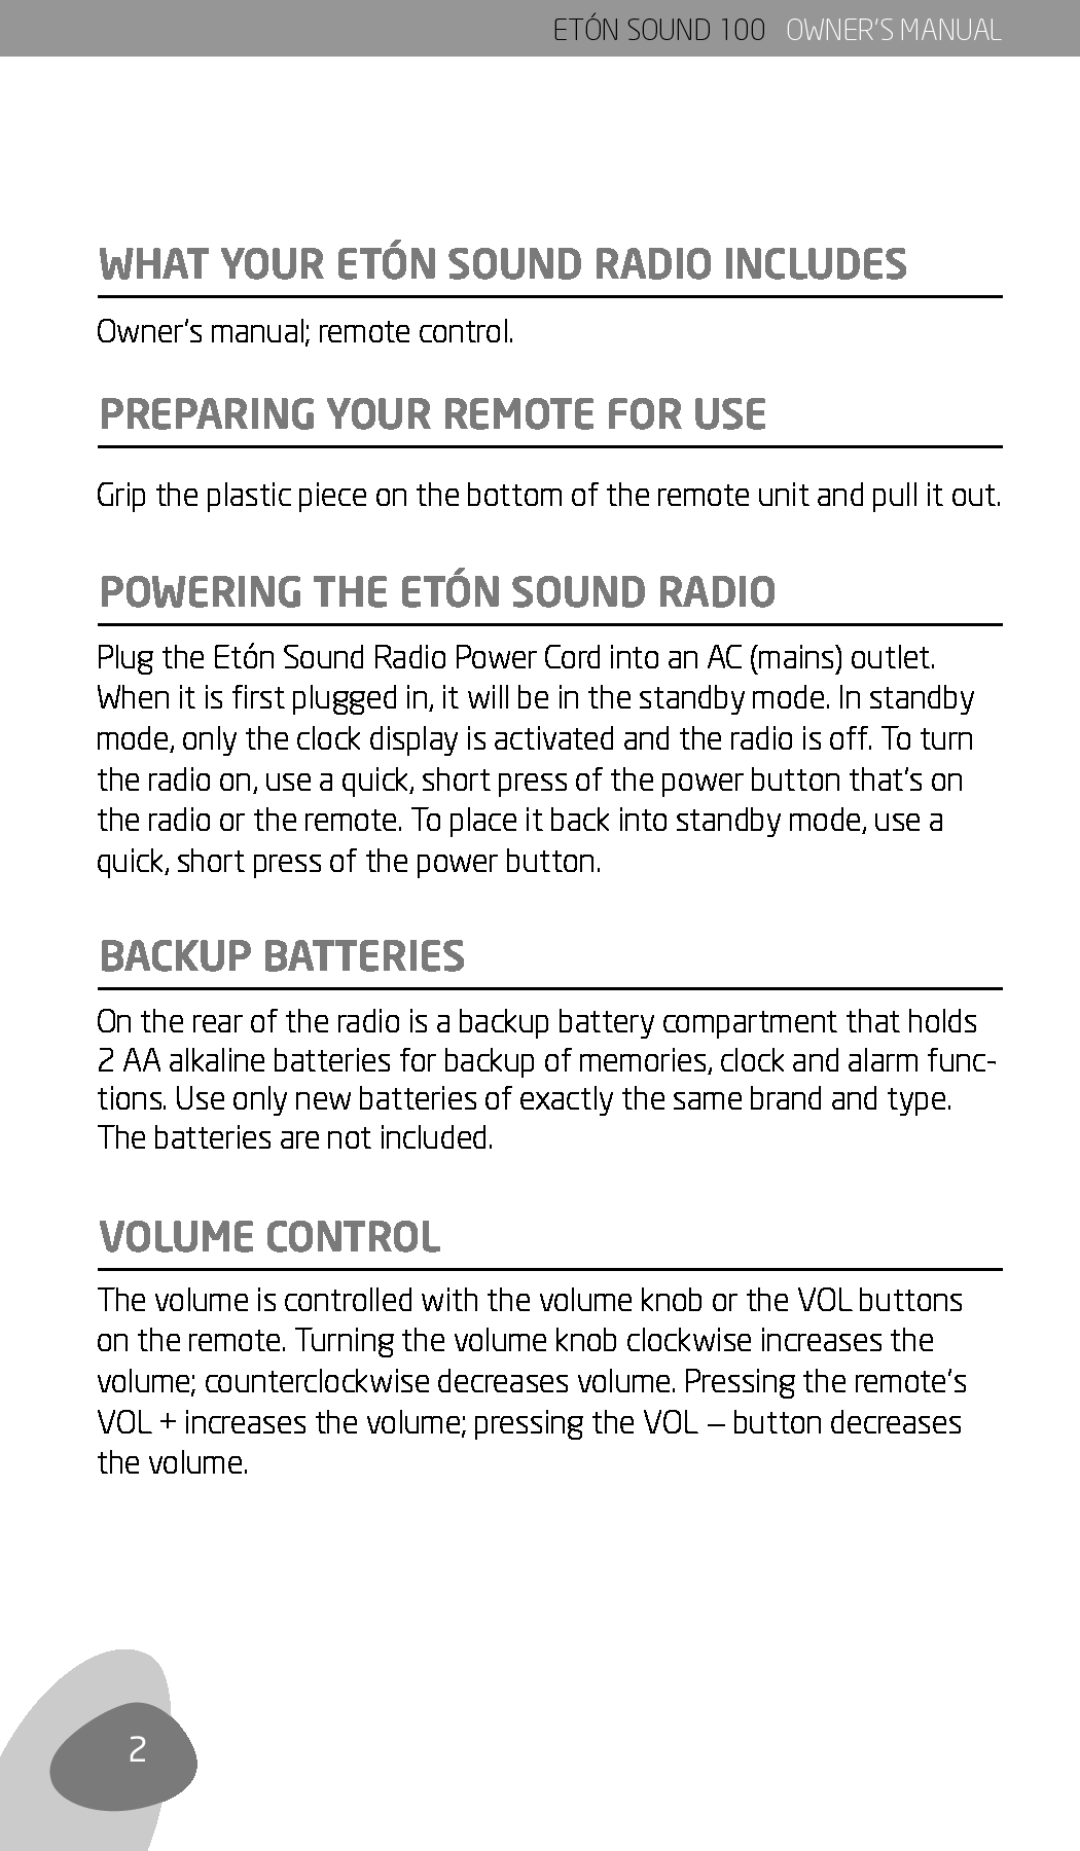 Eton Sound 100 What Your Etón Sound Radio Includes, Preparing Your Remote For Use, Powering The Etón Sound Radio 